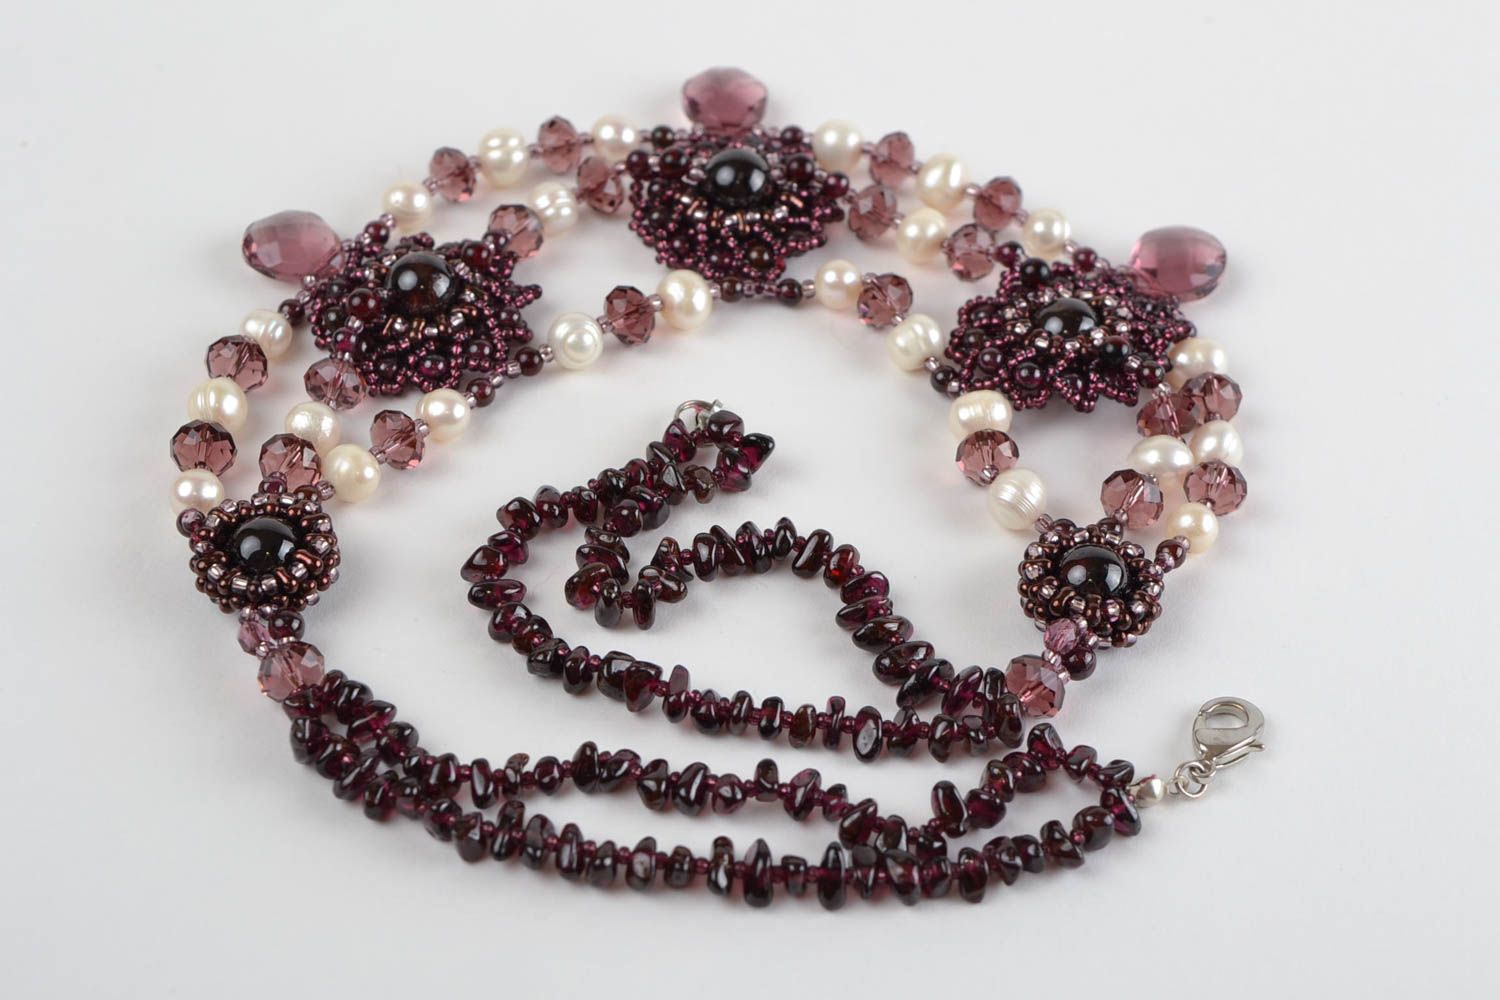 Handmade dark woven volume beaded women's designer necklace with natural stones photo 5